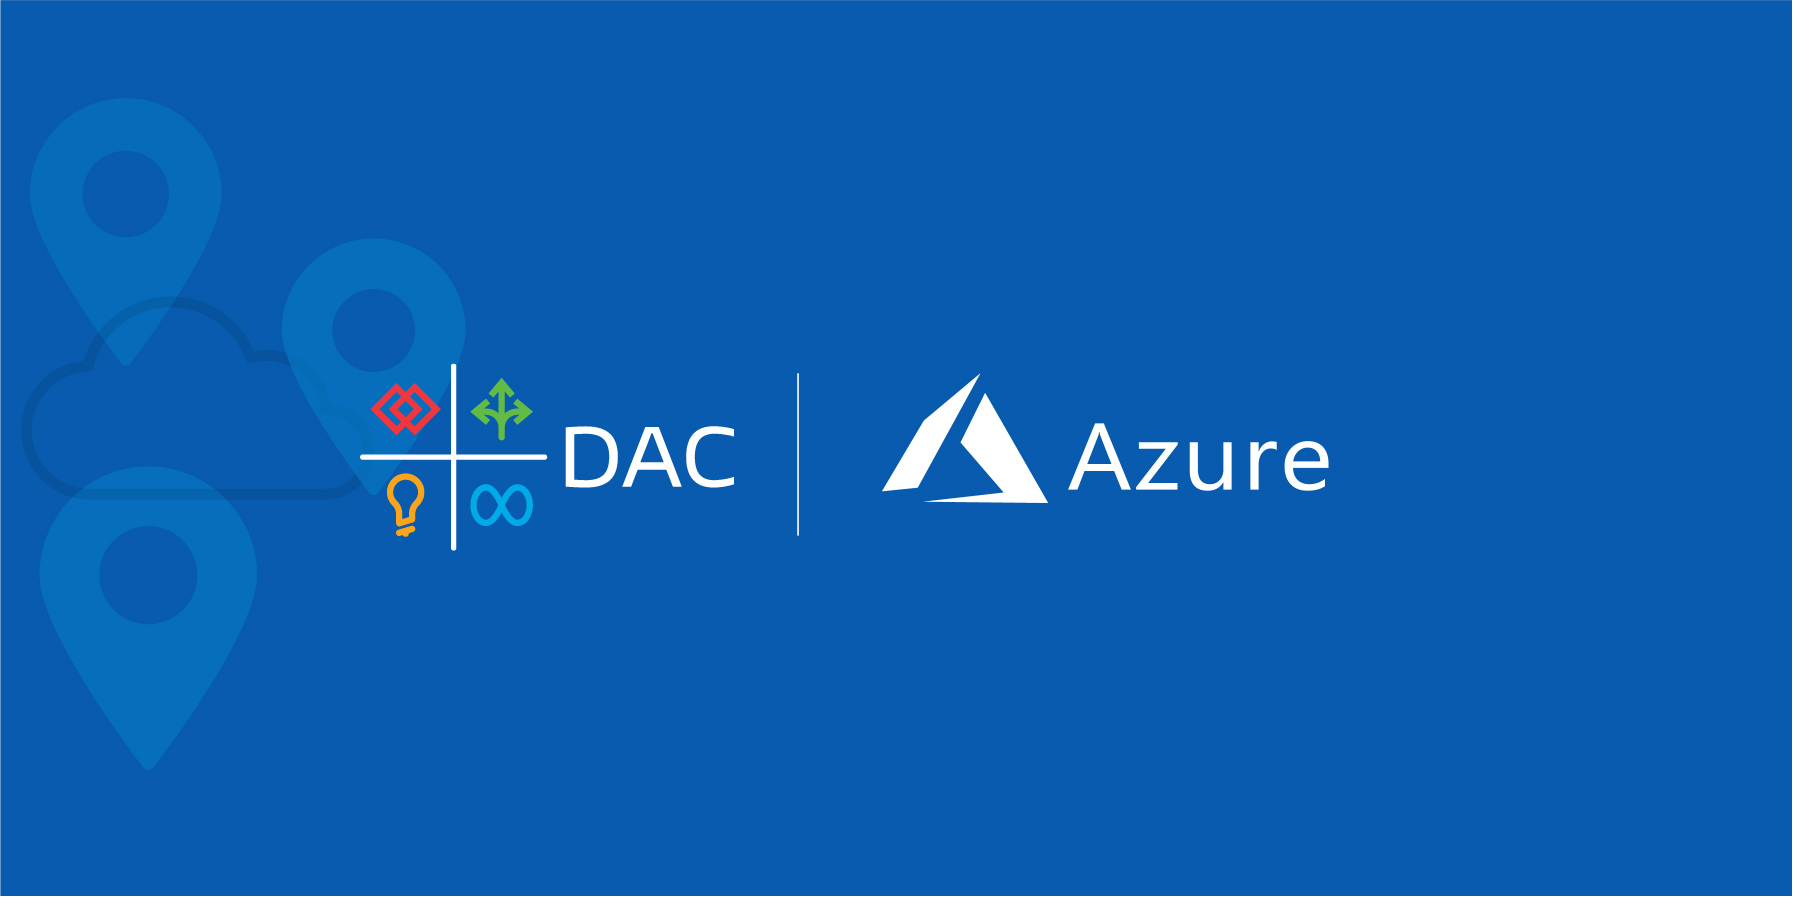 DAC Offers Local Presence Management (LPM) on Microsoft Azure